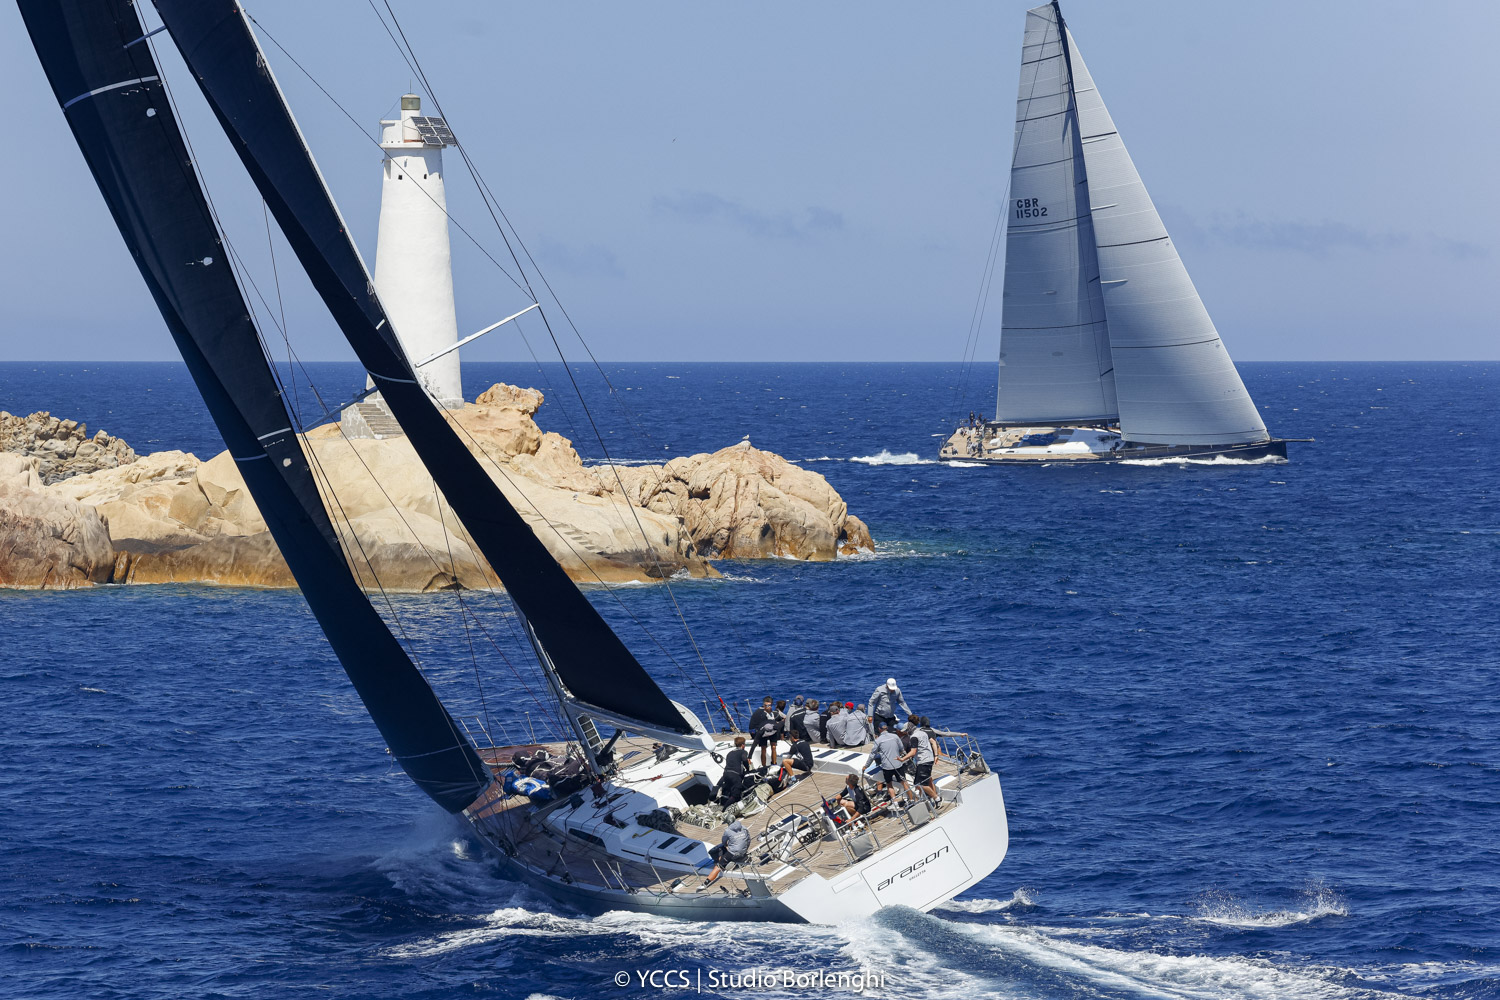 Giorgio Armani new title sponsor of YCCS Superyacht Regatta - Press Release - Yacht Club Costa Smeralda